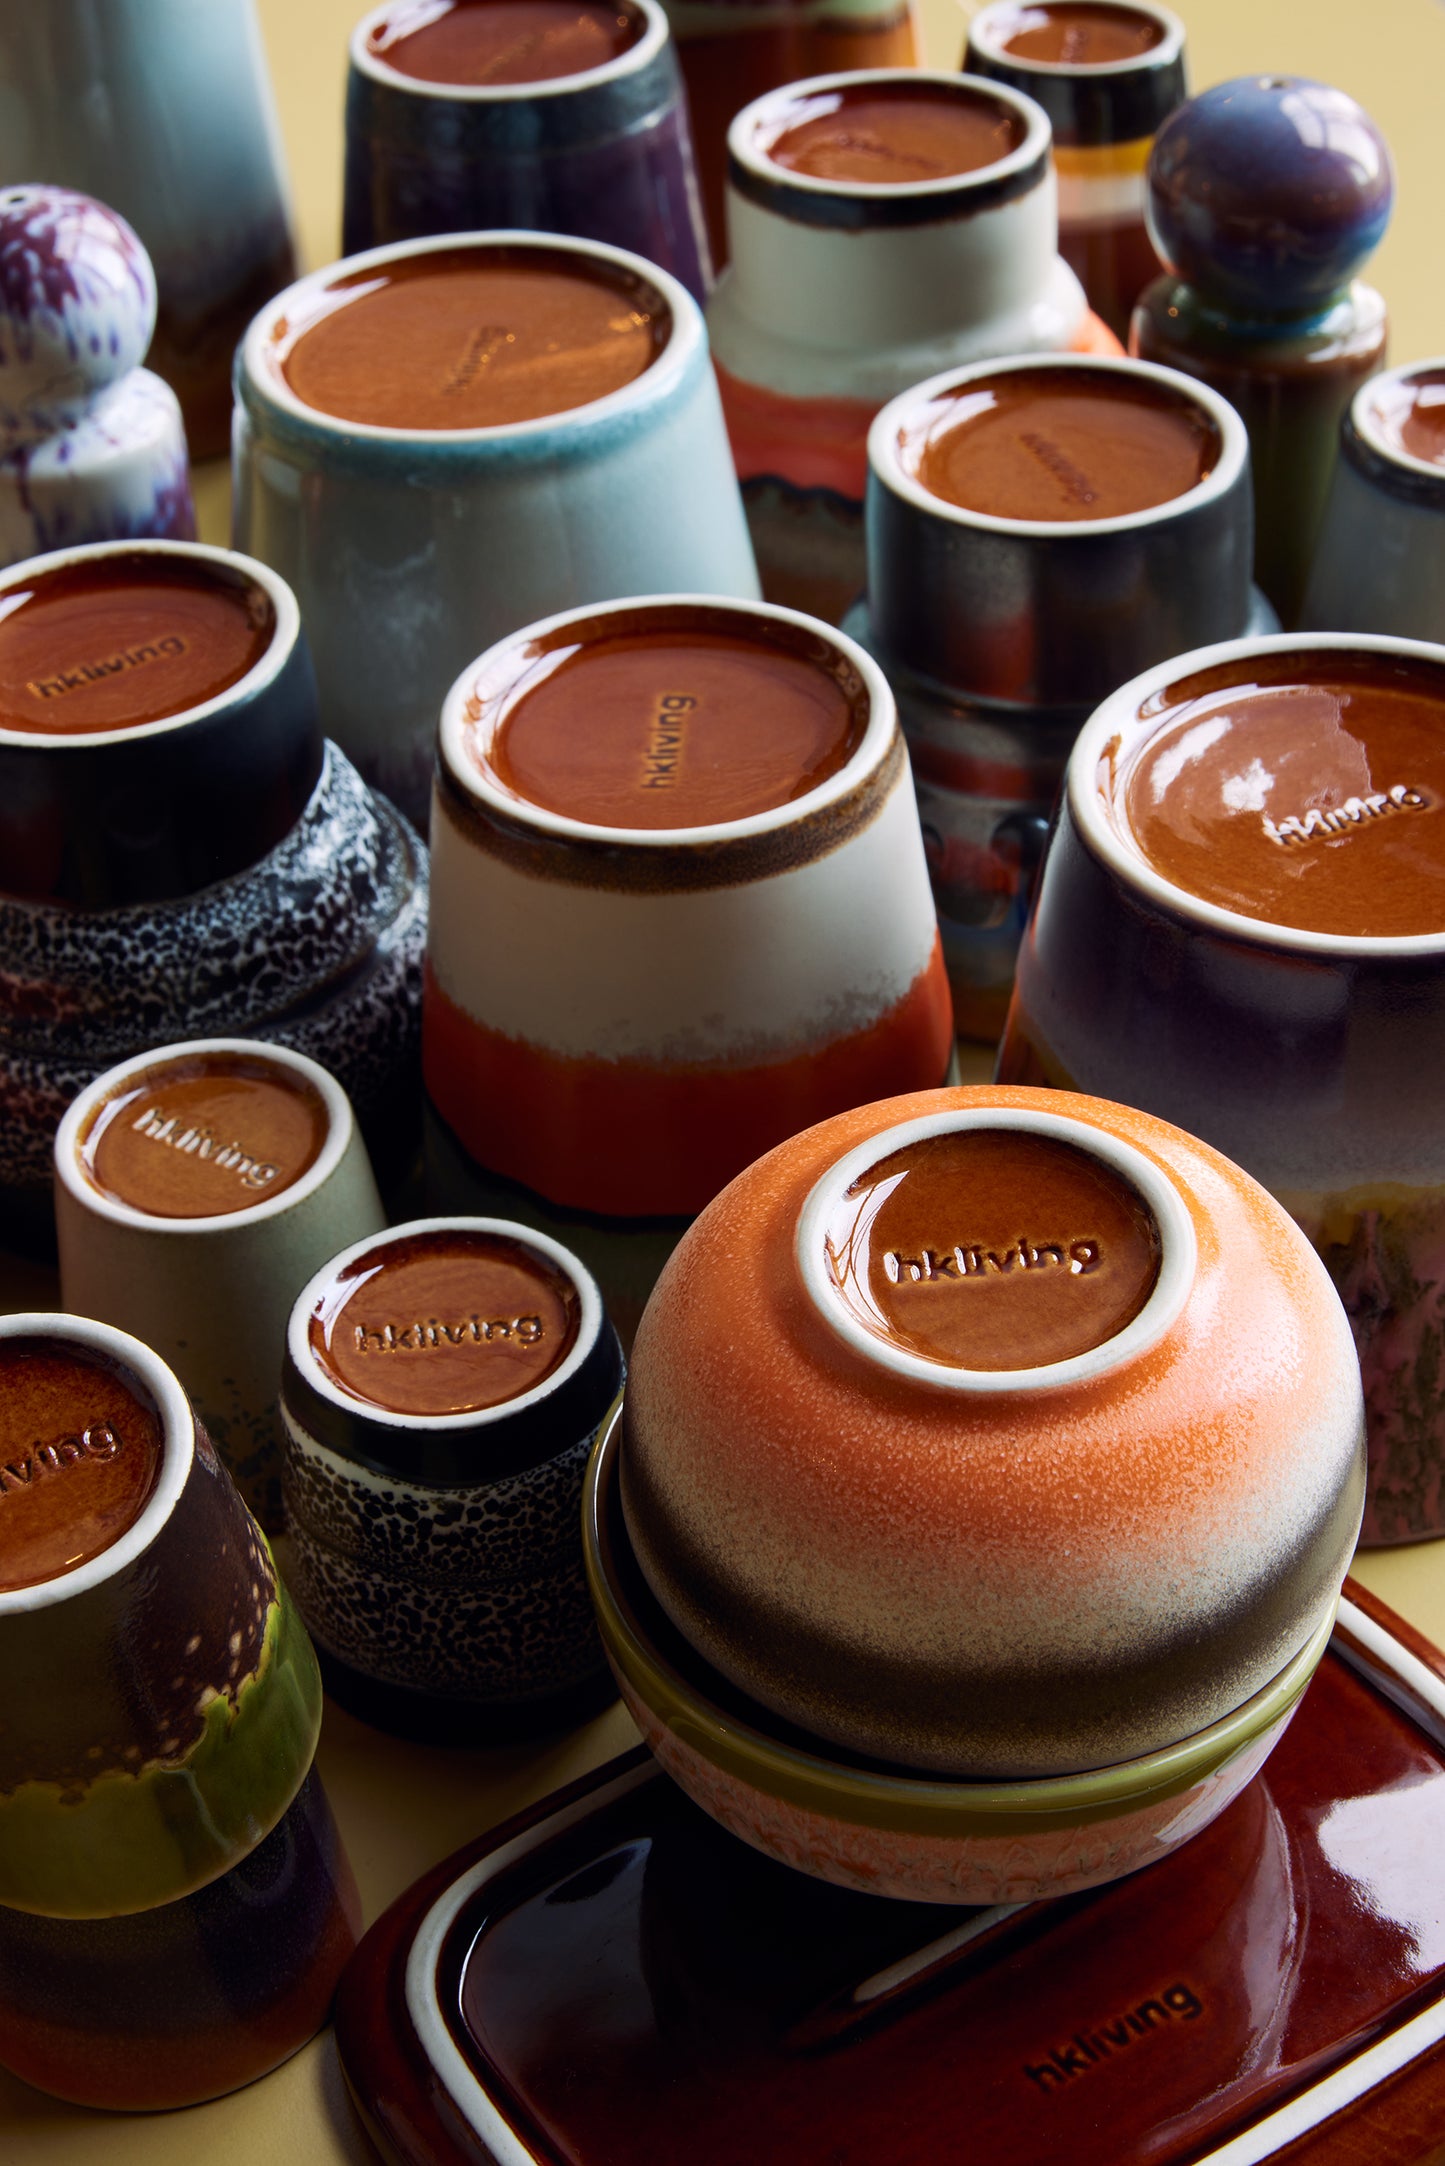 HKliving 70's Ceramics Burst Cappuccino Mug